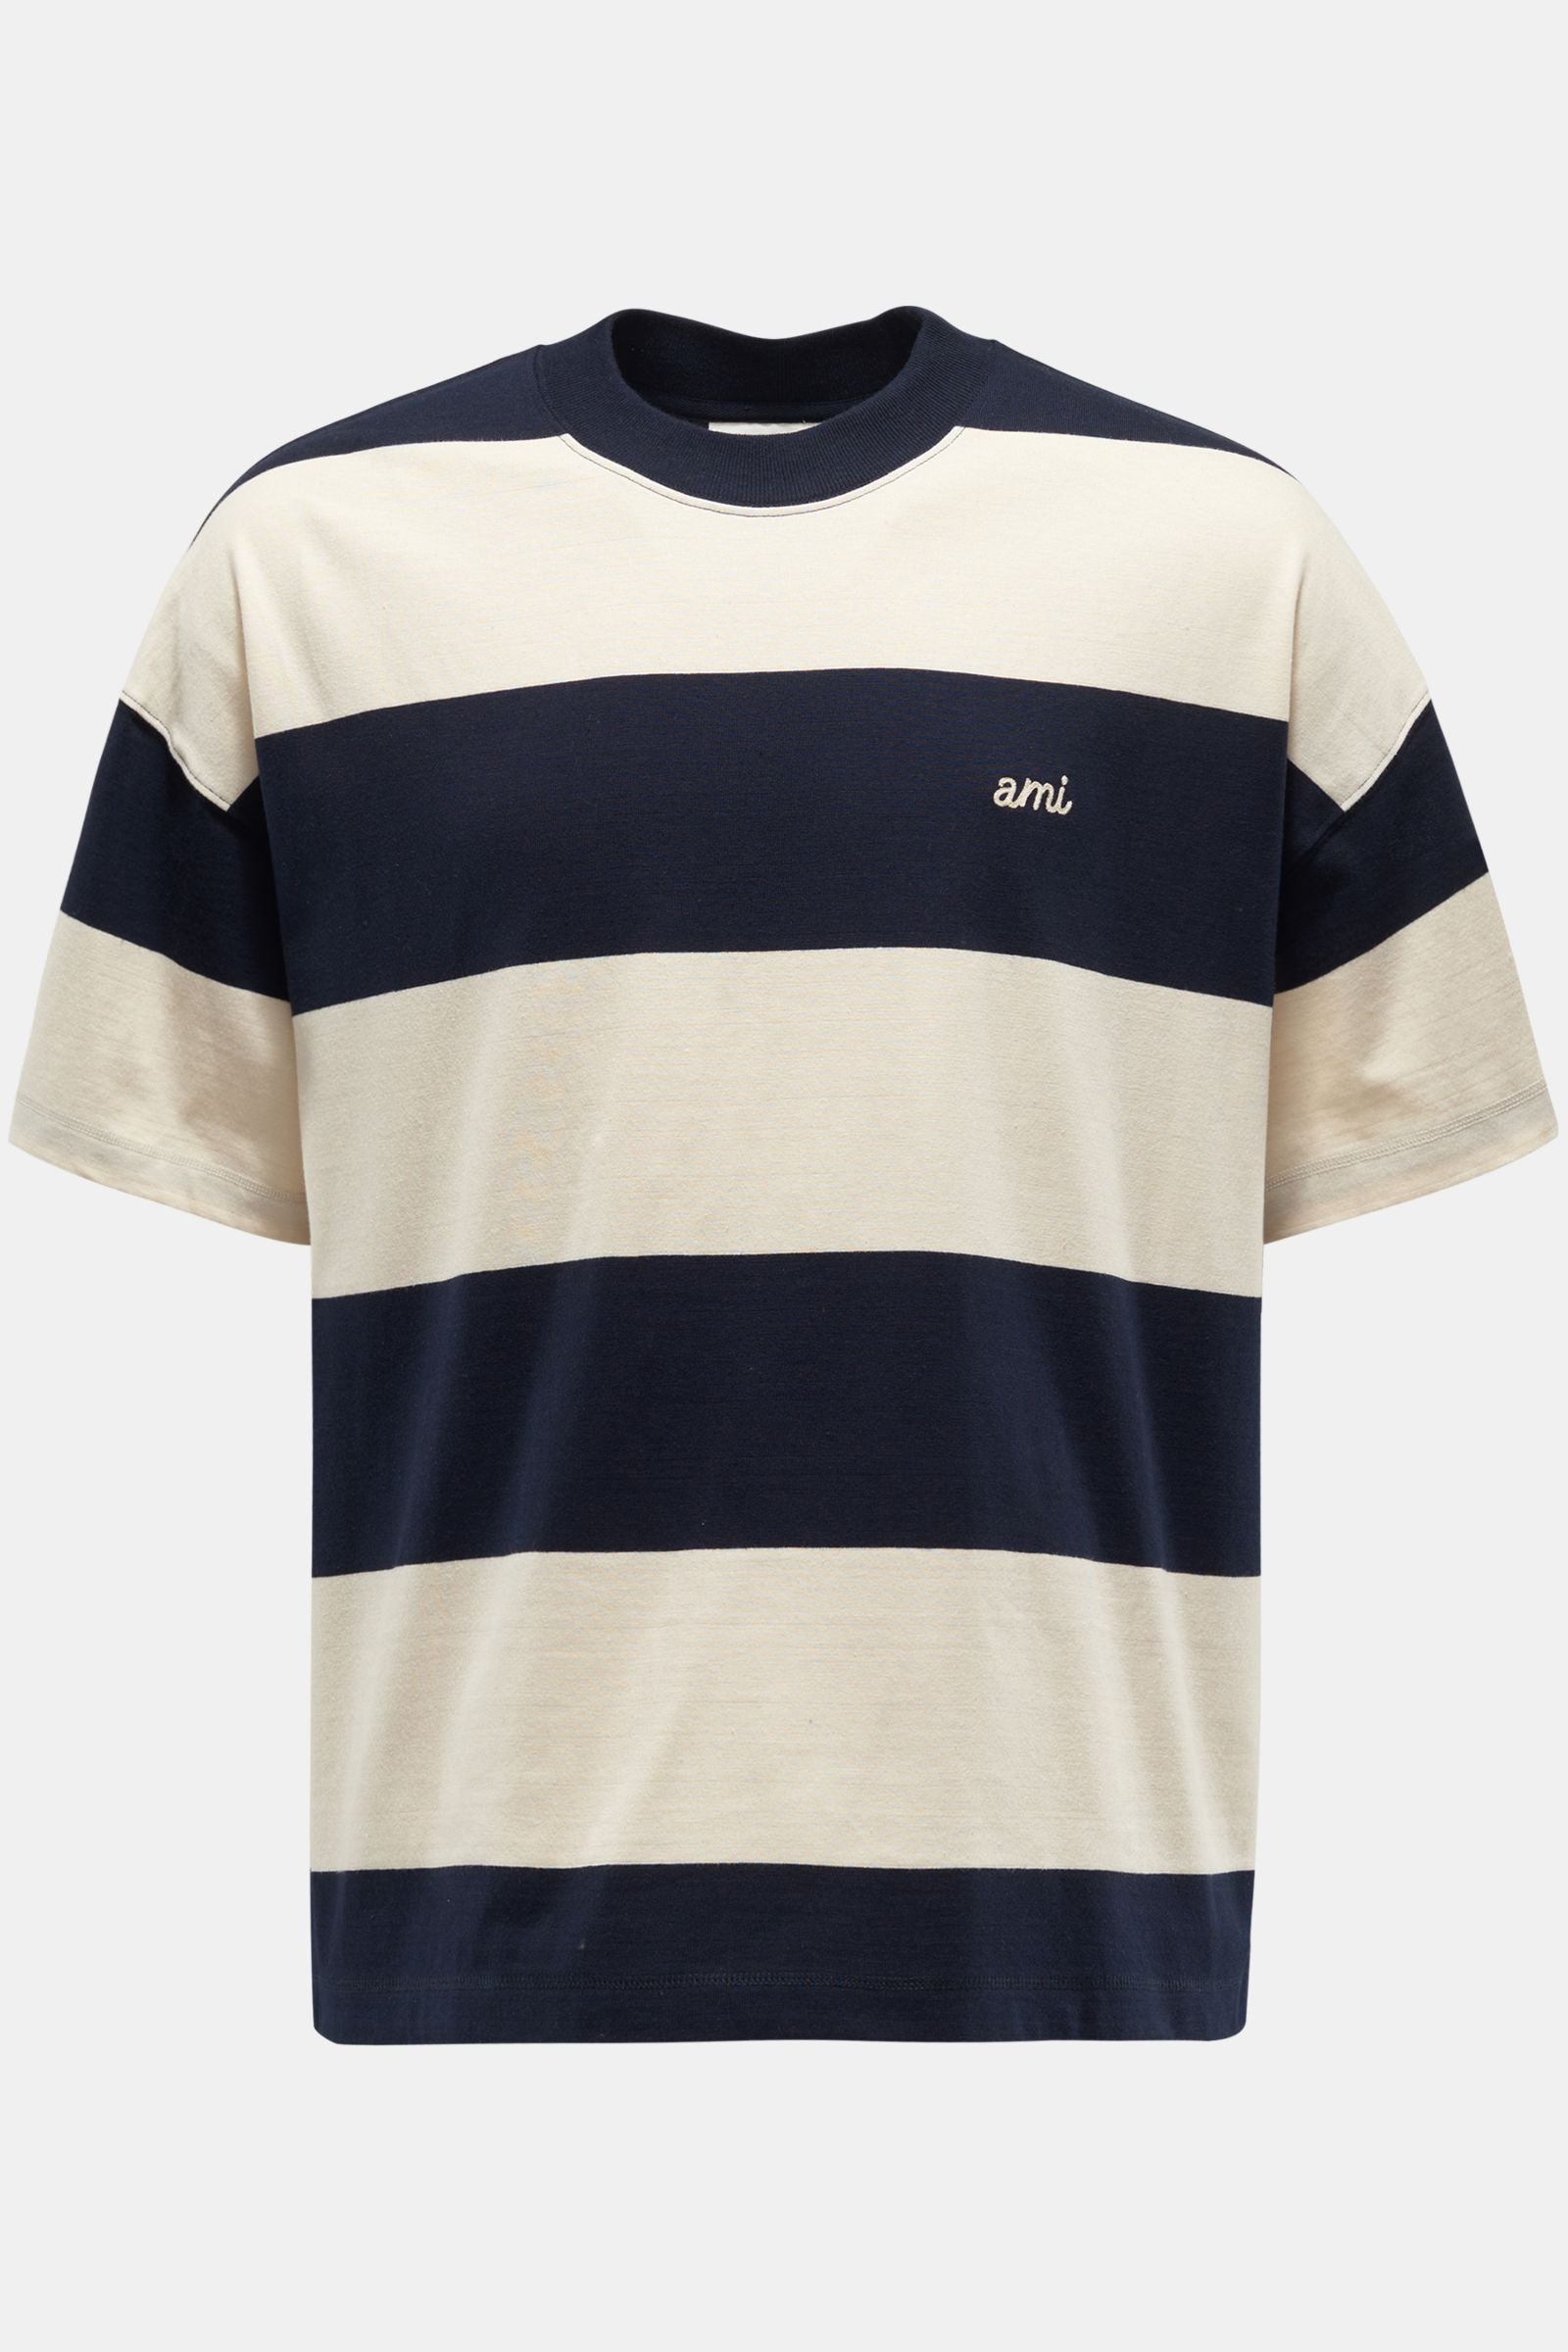 Crew neck T-shirt navy/cream striped